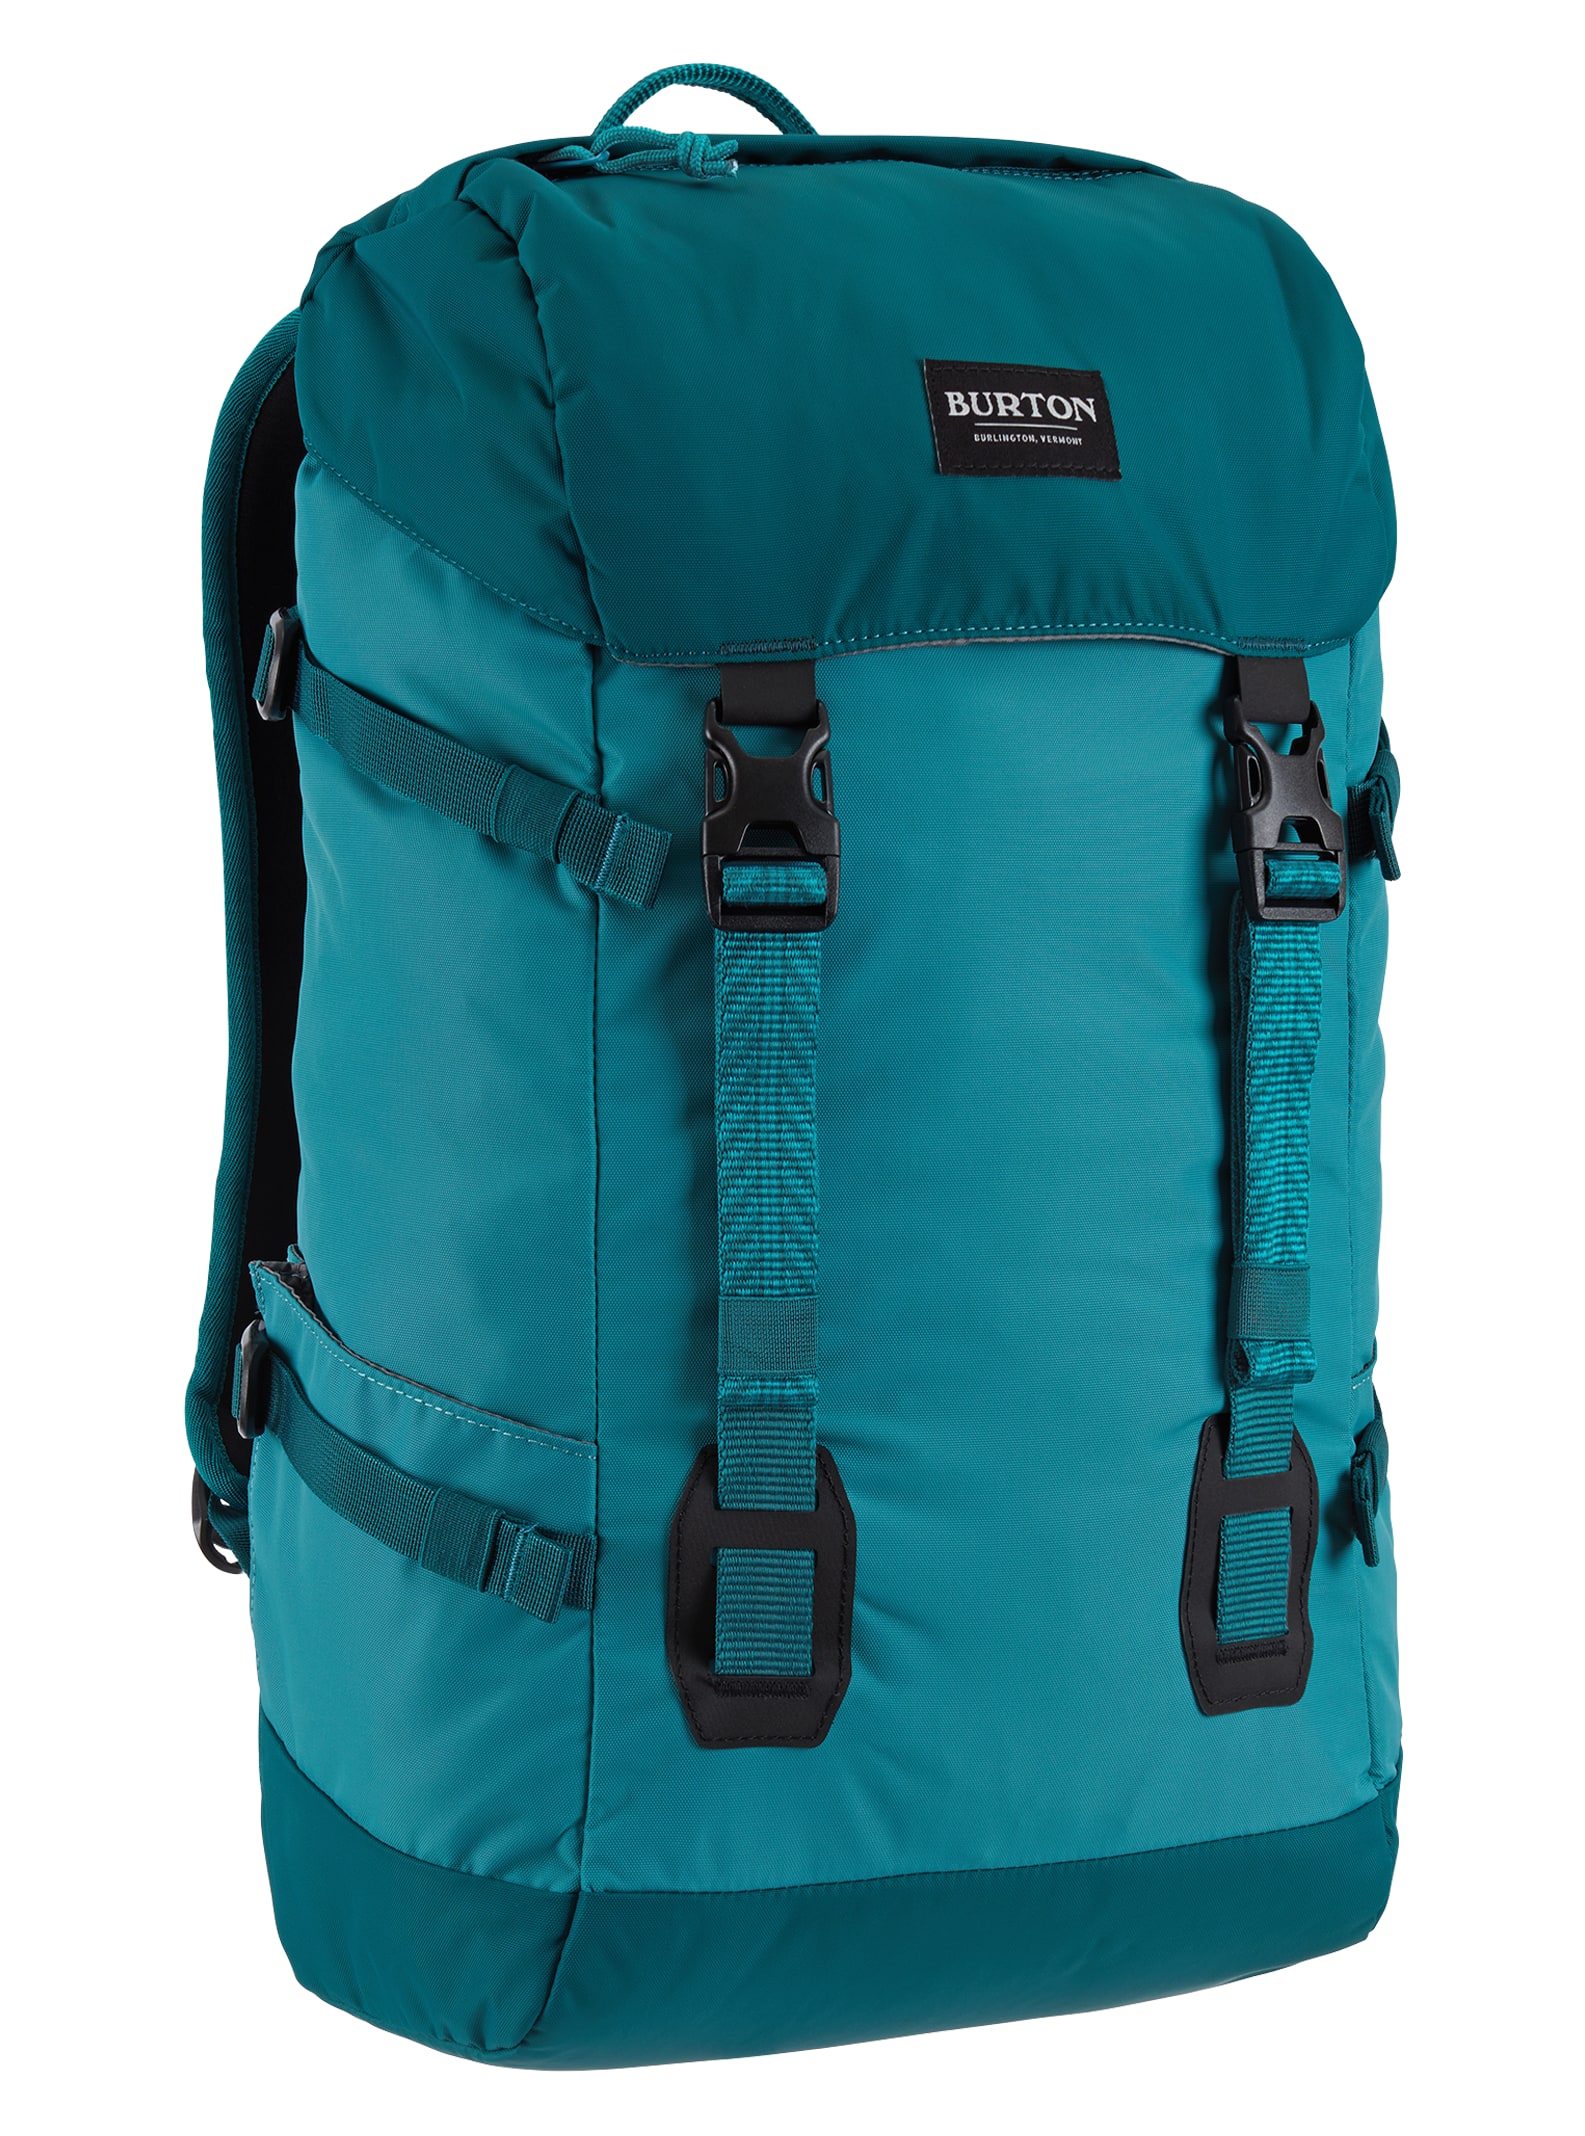 Burton Tinder 2.0 30L Backpack | Burton.com Winter 2022 US